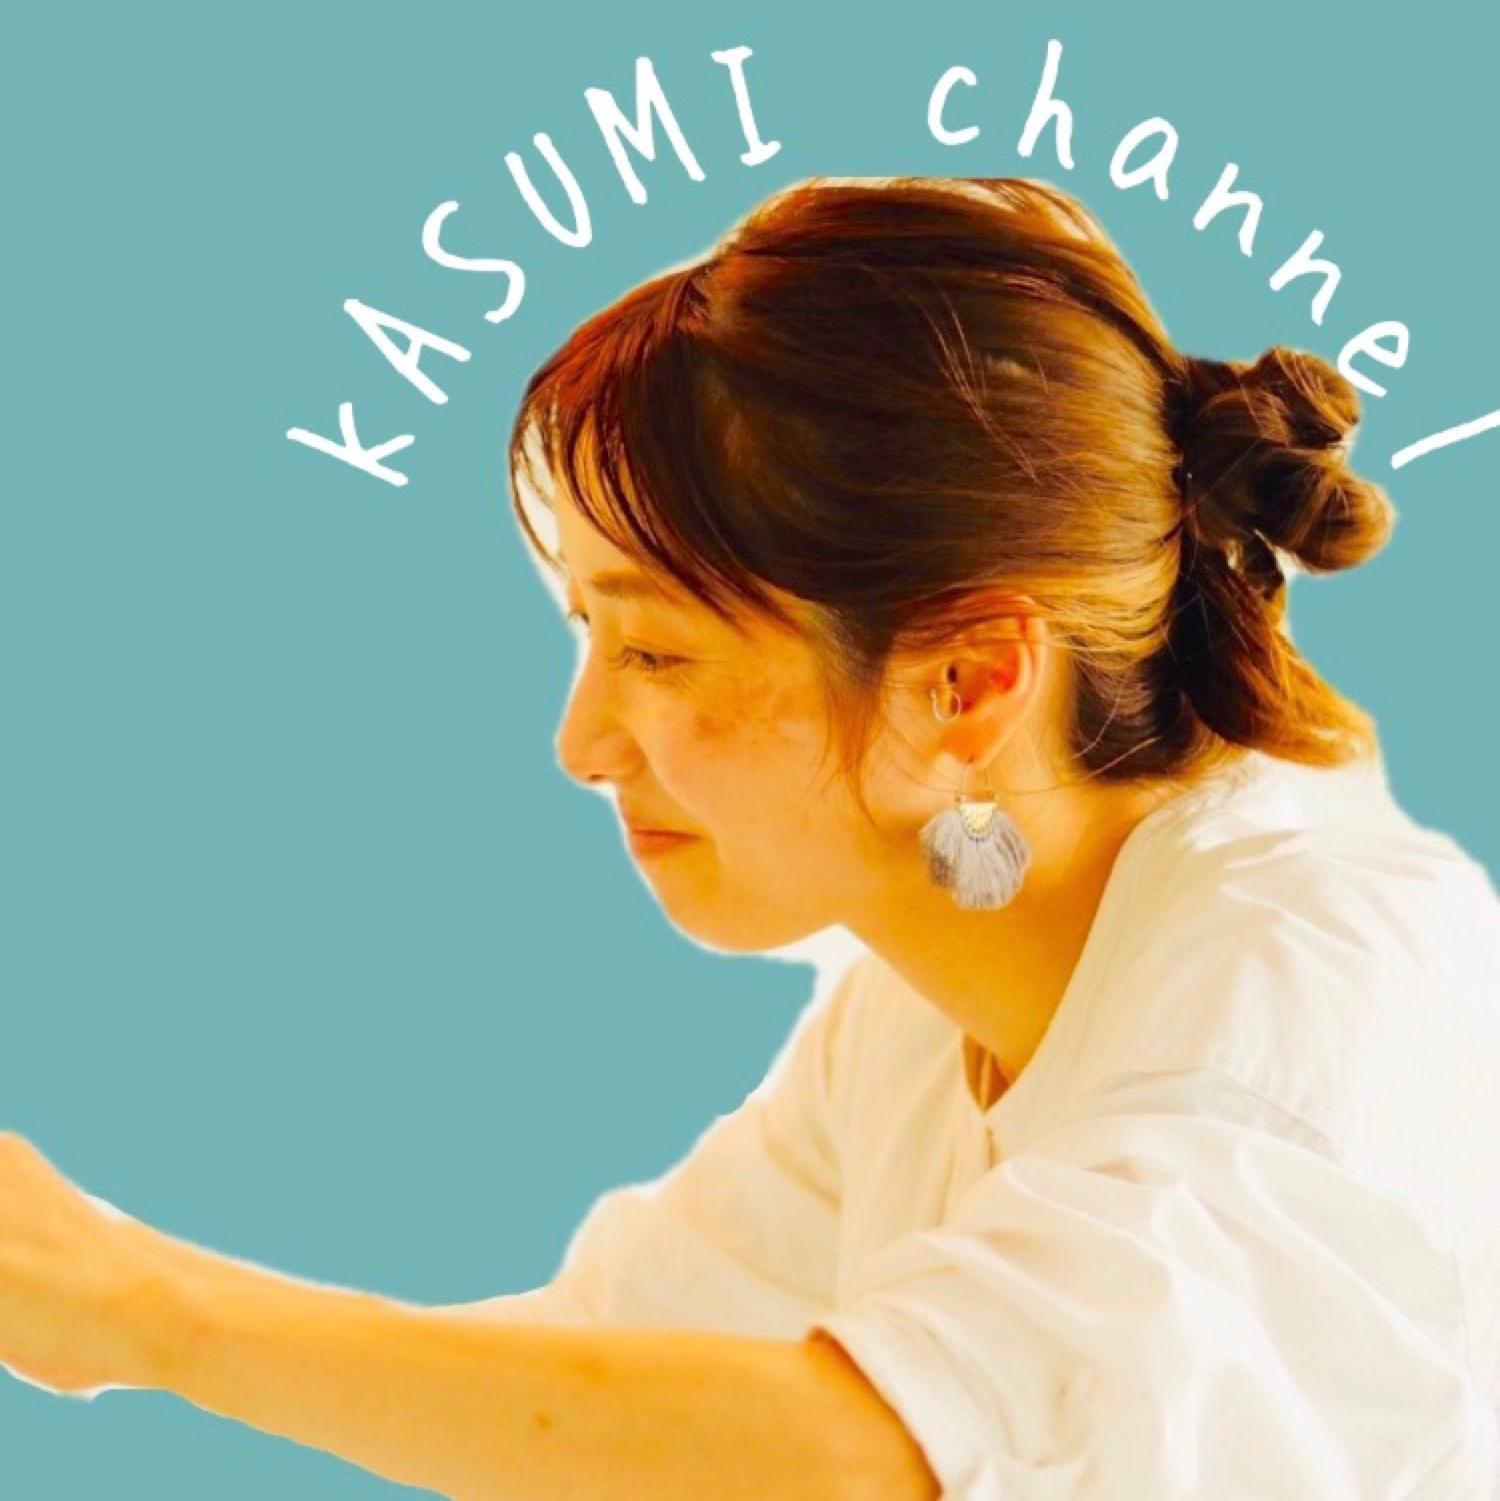 kasumi channelの画像